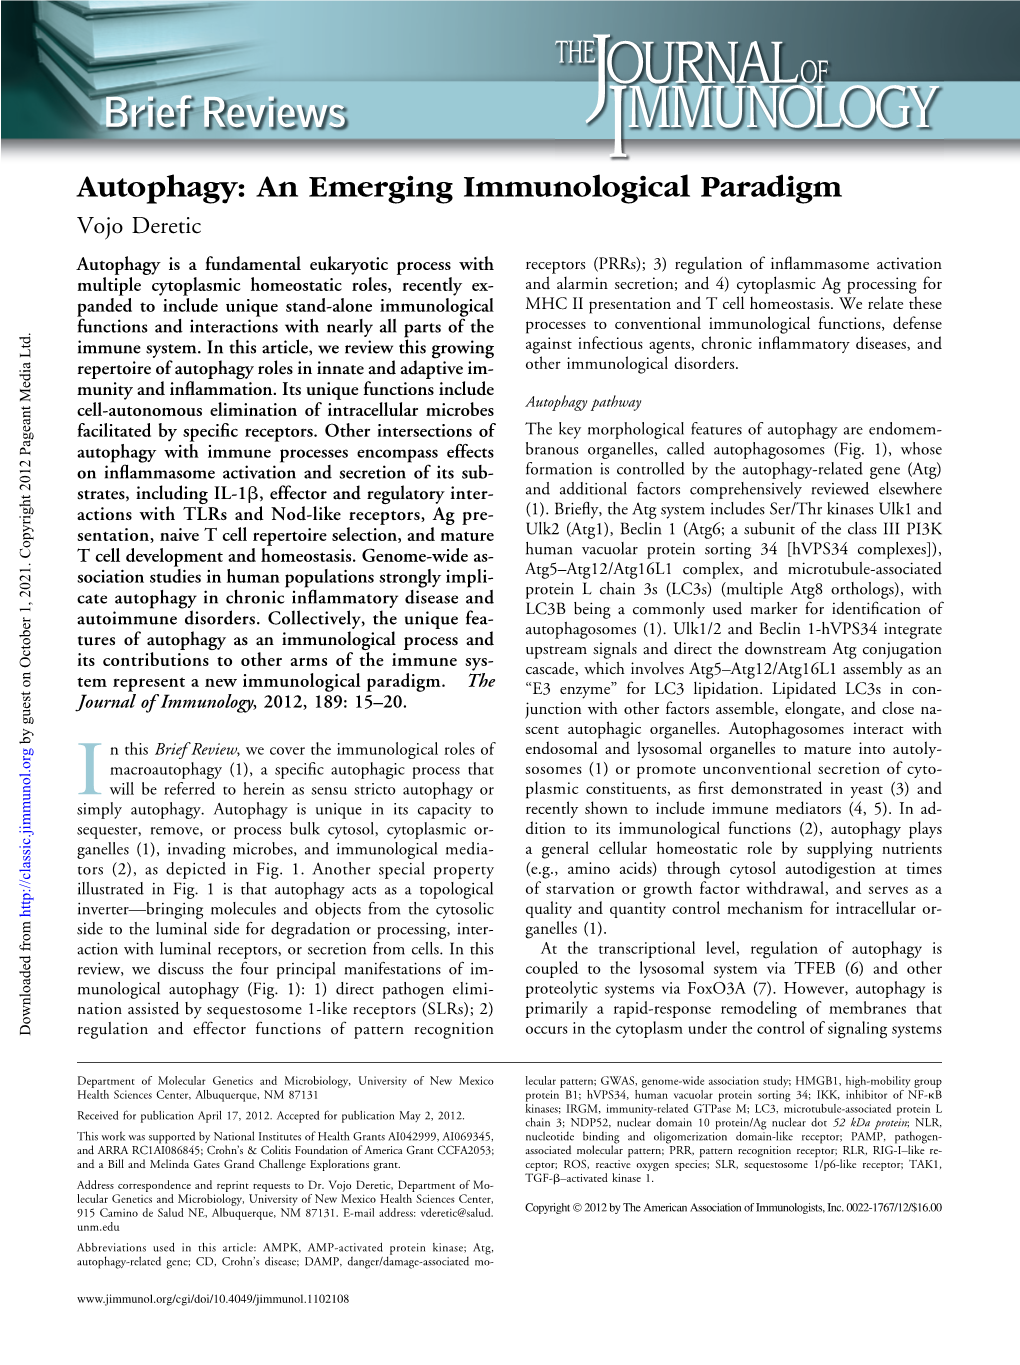 Paradigm Autophagy: an Emerging Immunological